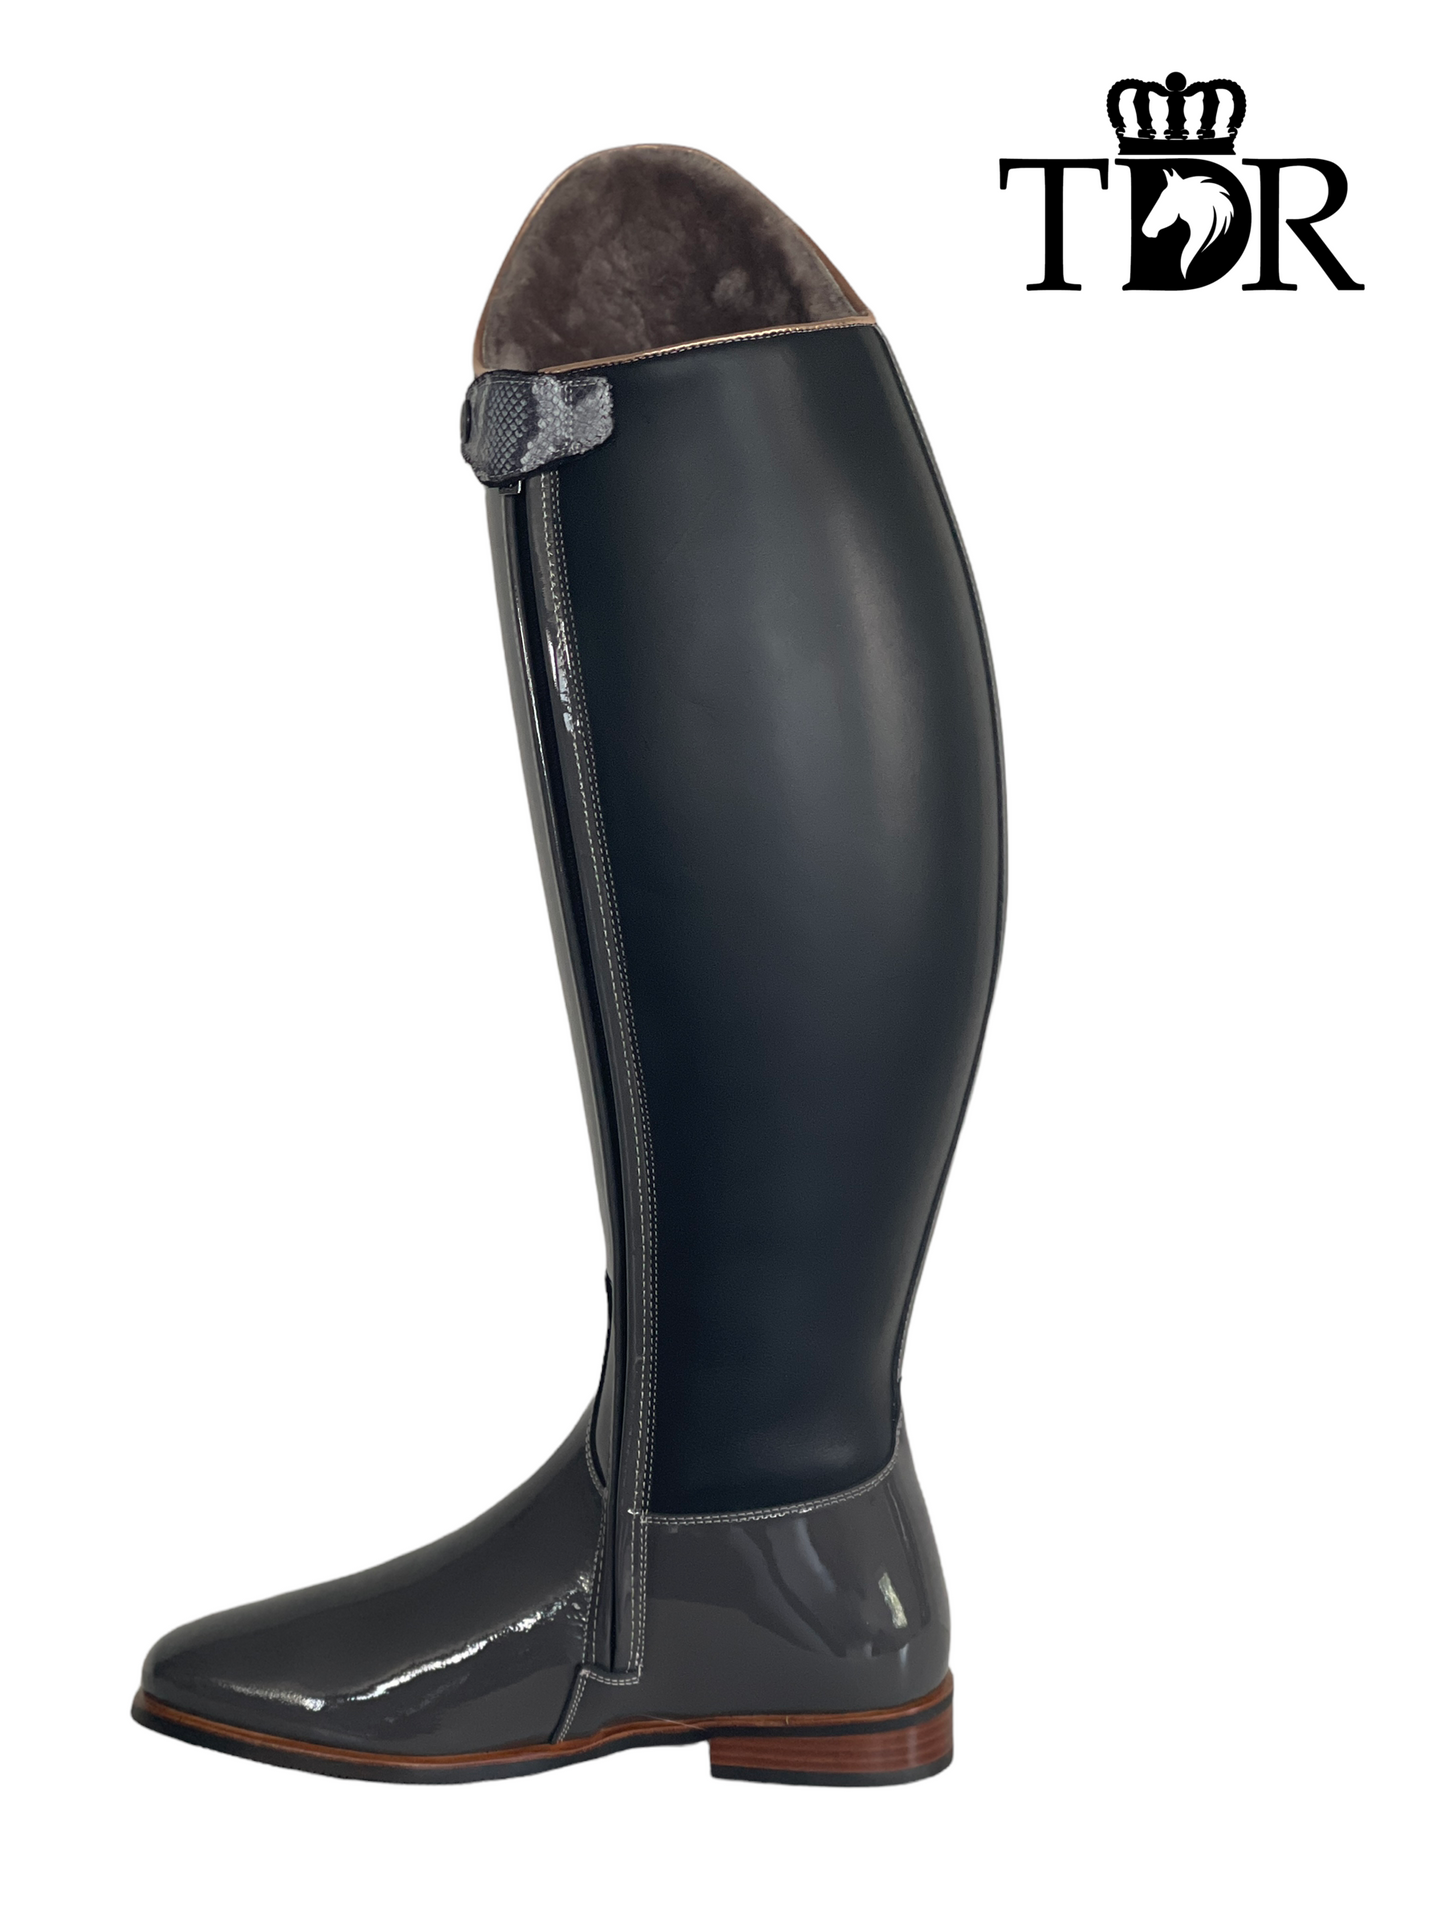 Kingsley WINTER Capri Dressage Boot (41.5 WIDE/MA/XXXL)